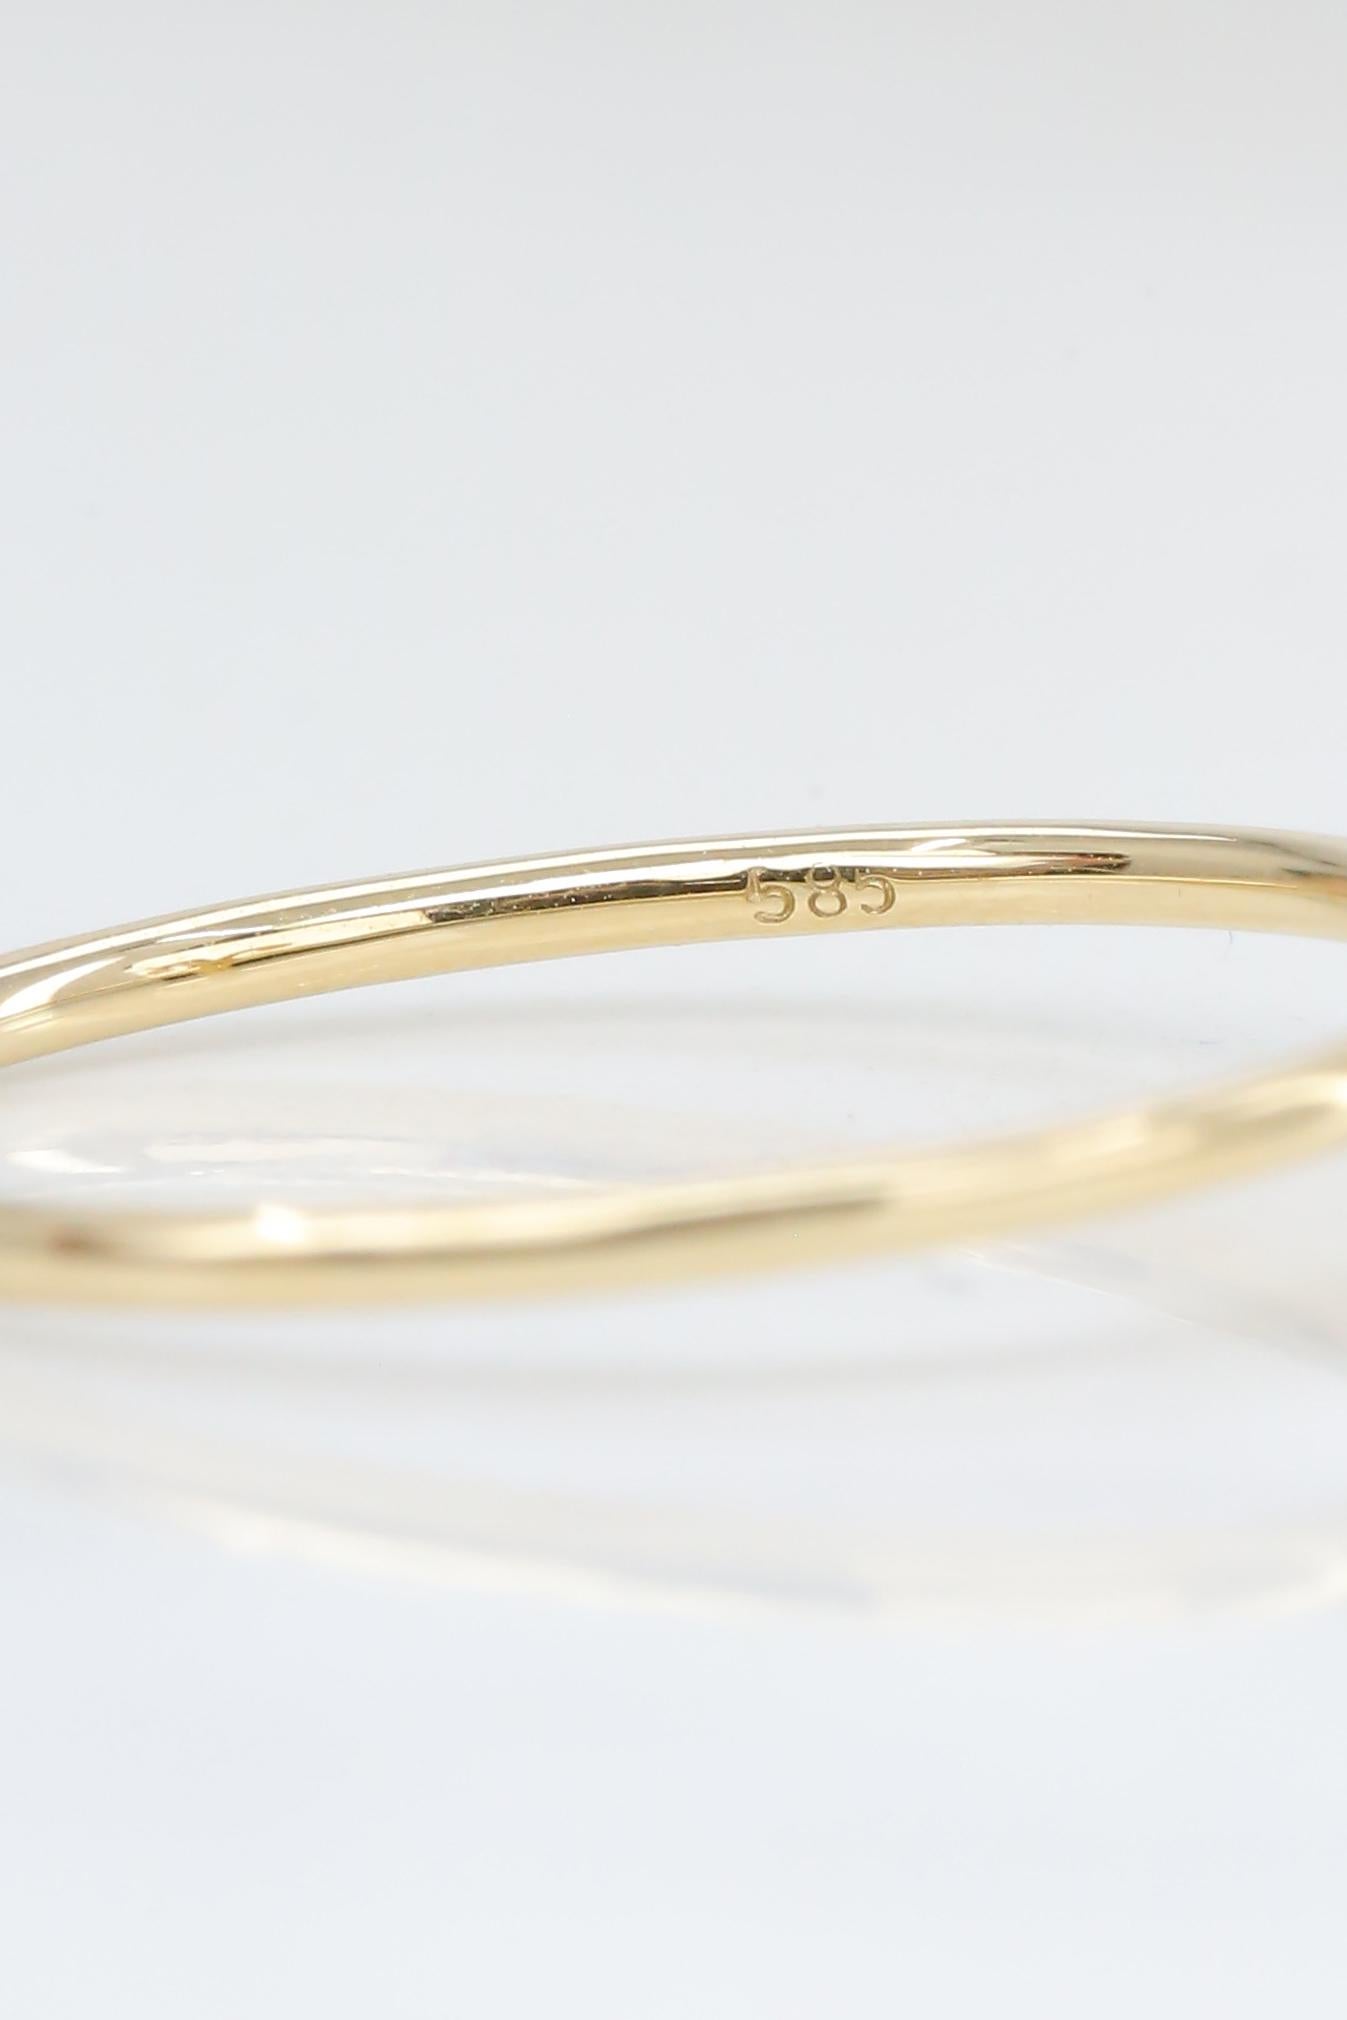 For Sale:  14K Gold Capricorn Ring, Capricorn Sign Gold Ring 8